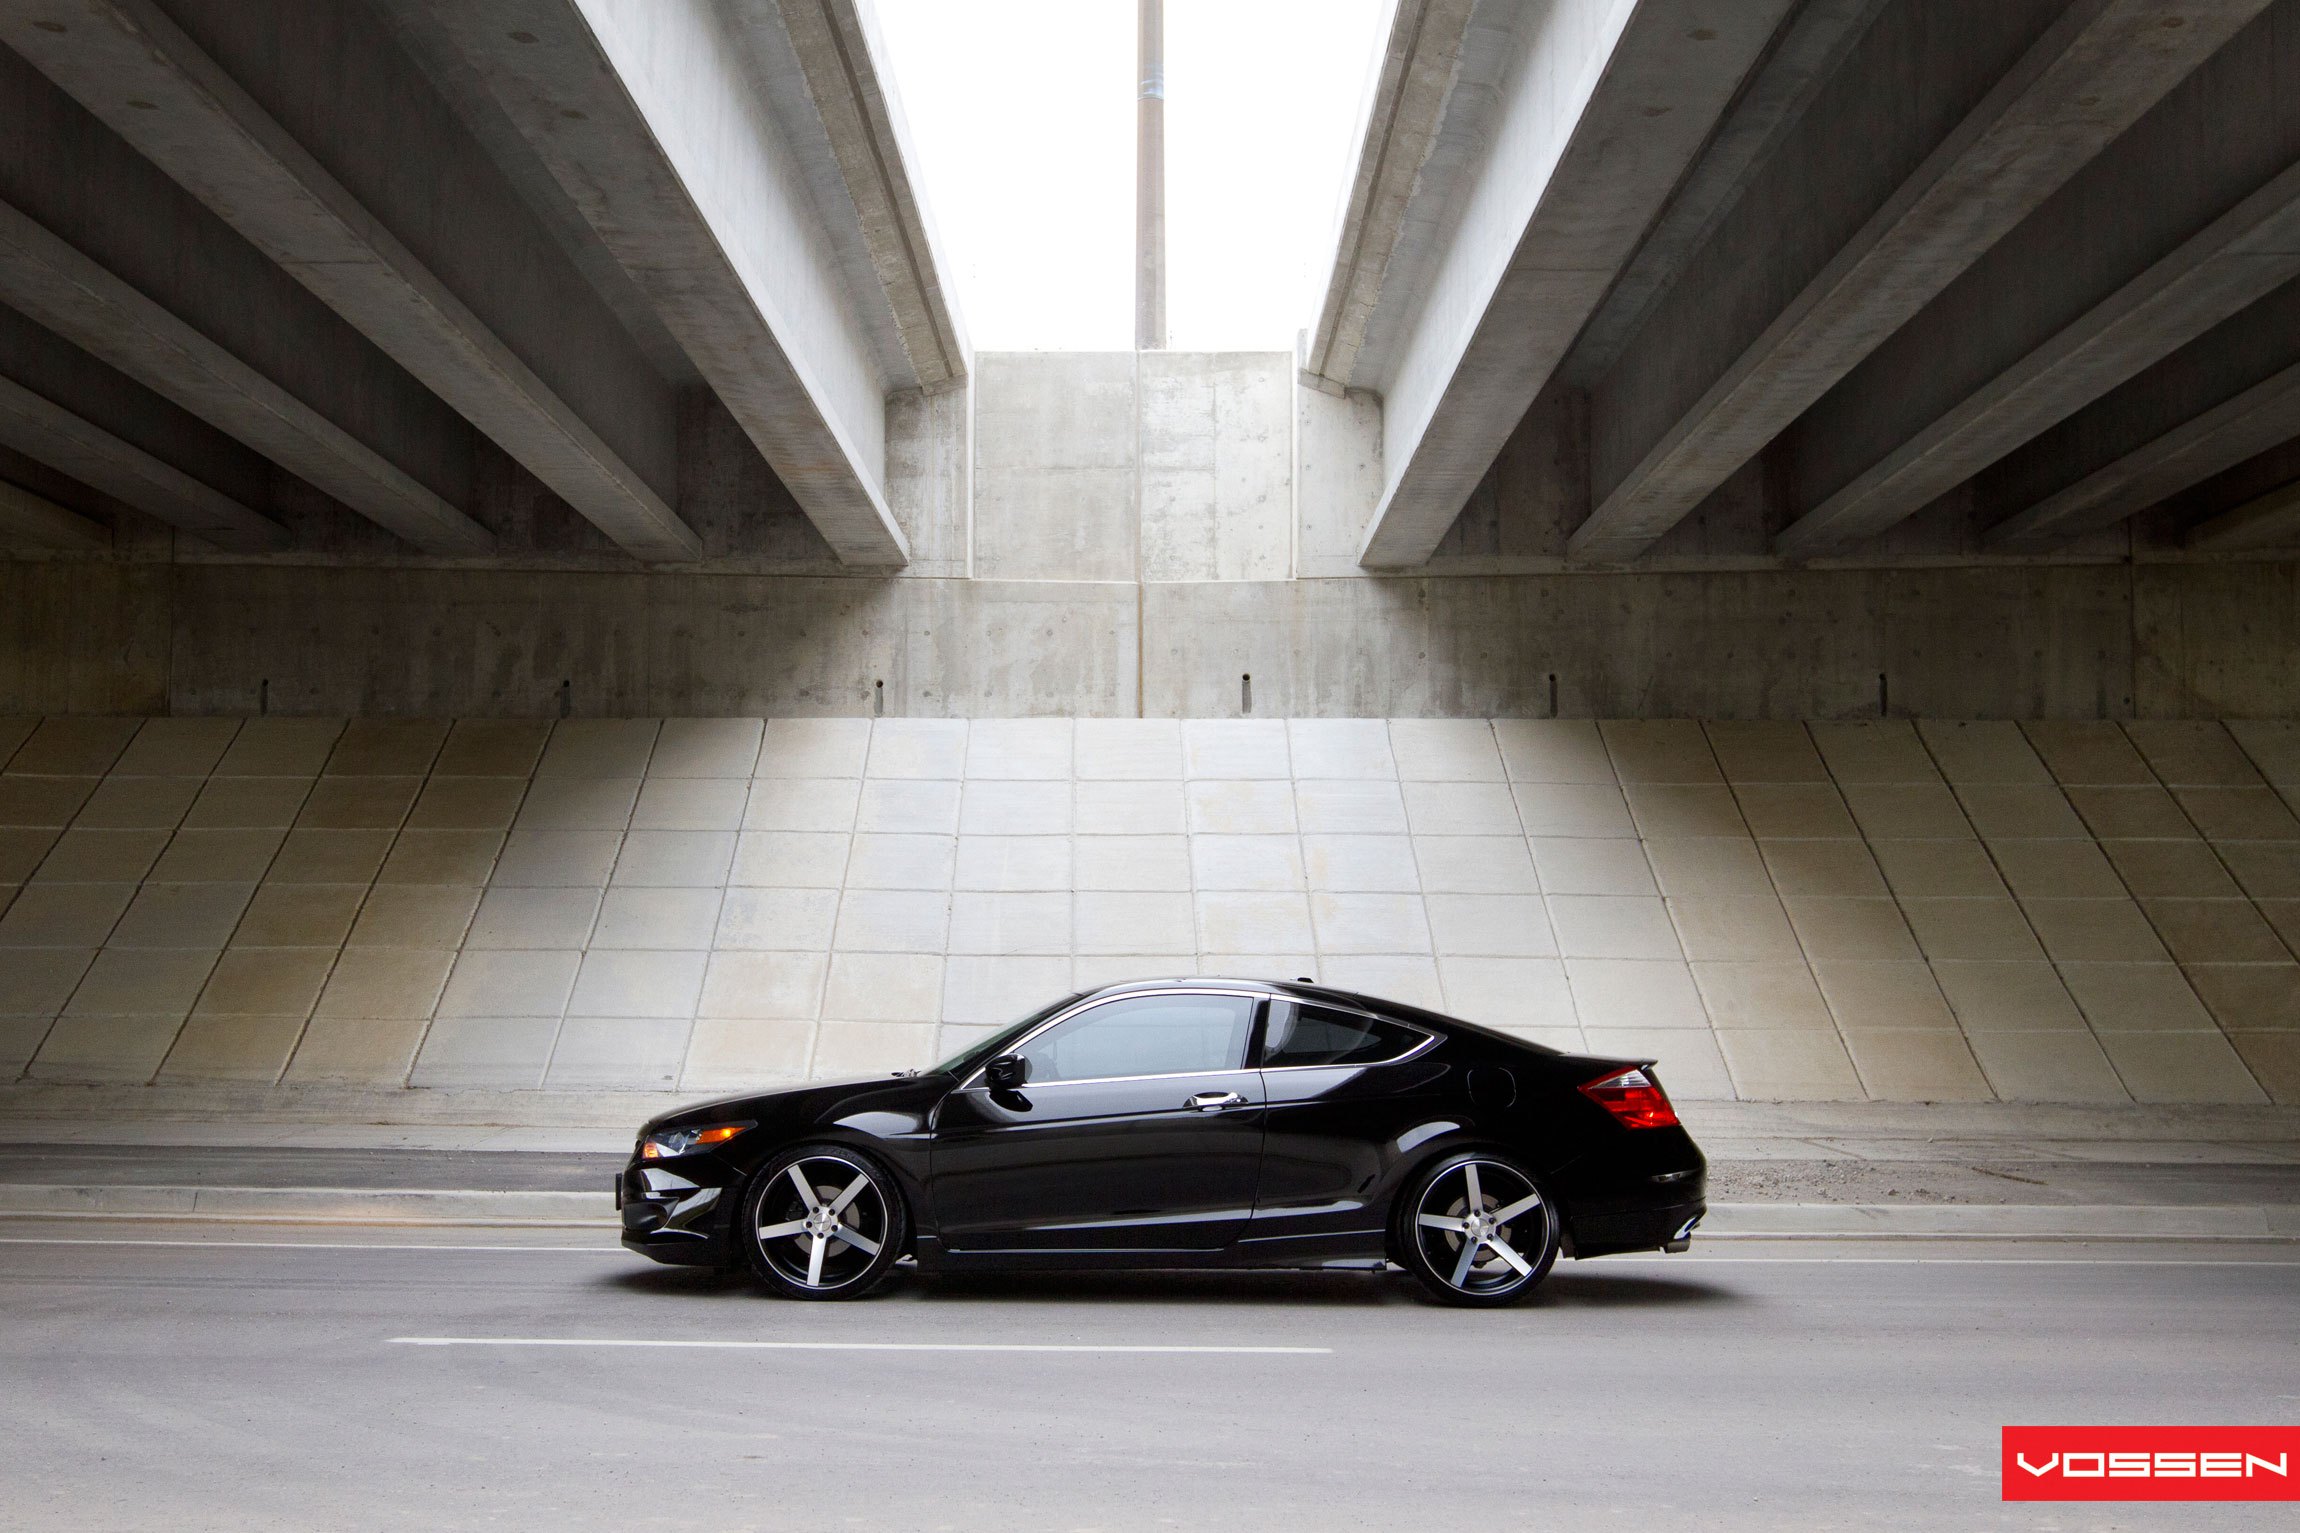 Black Honda Accord on Vossen Wheels - Photo by Vossen